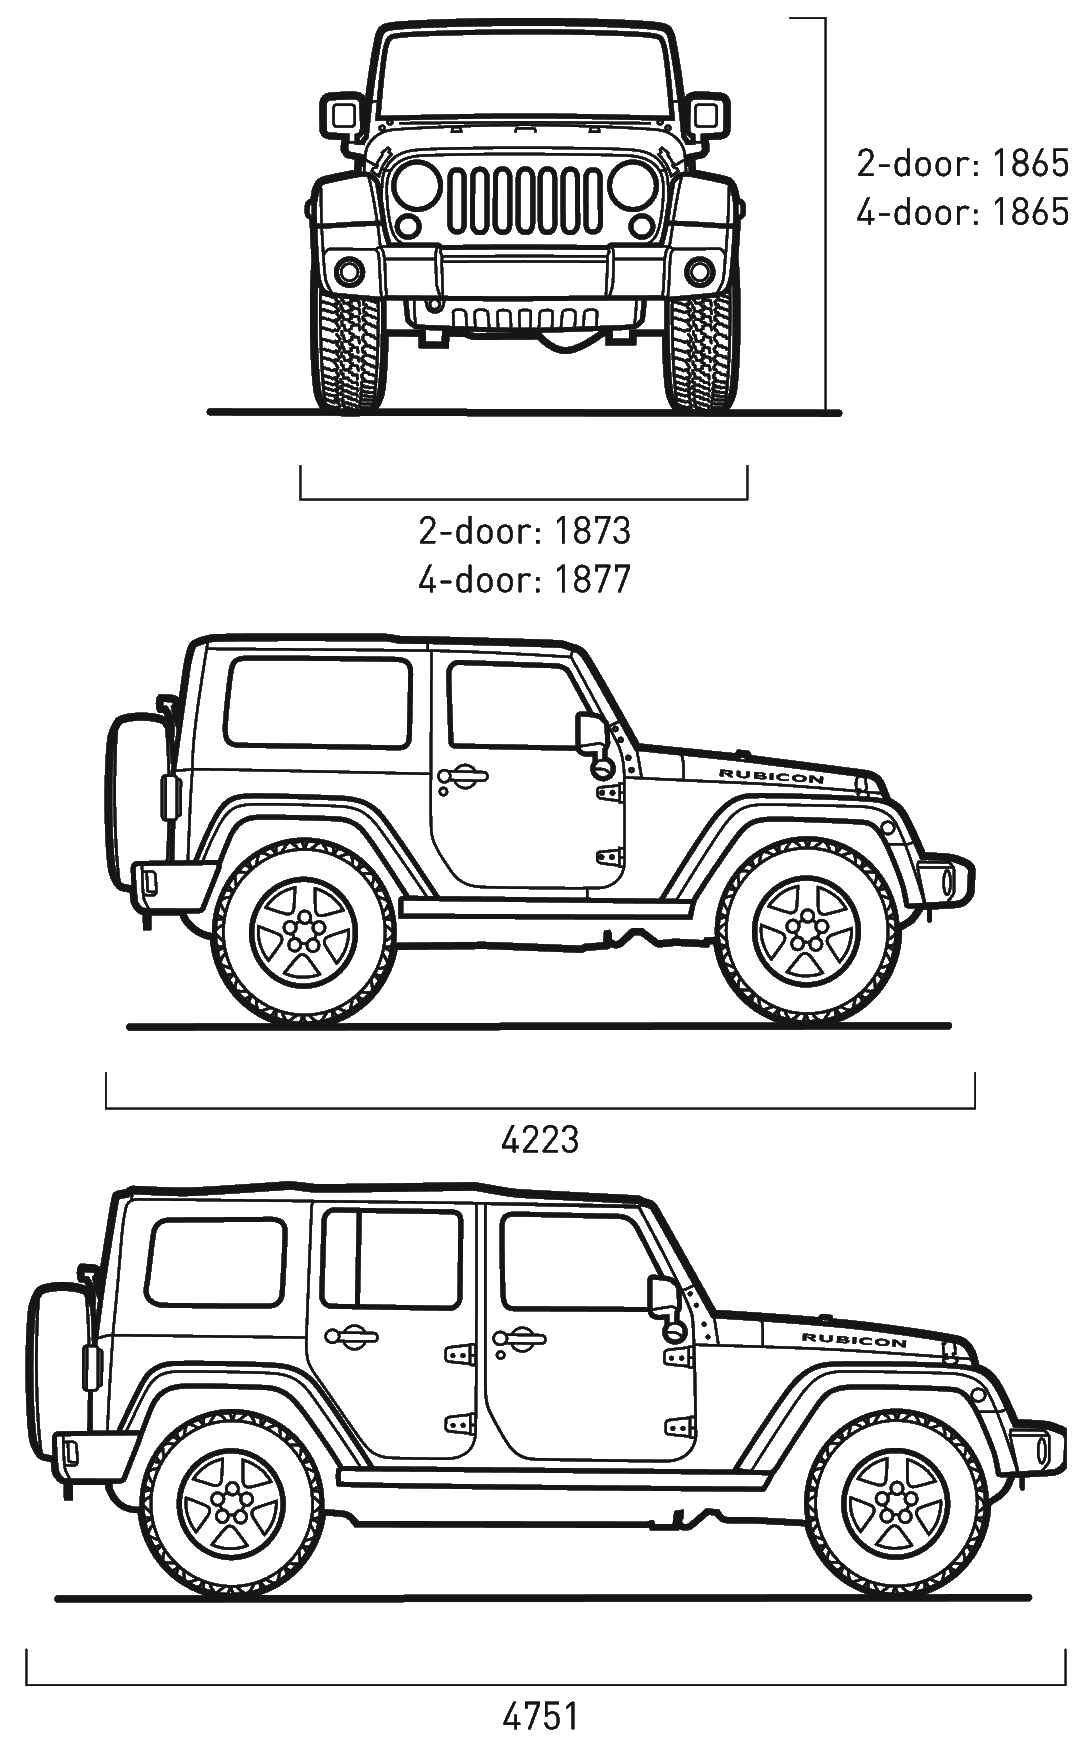 2008 Jeep wrangler dimensions #1